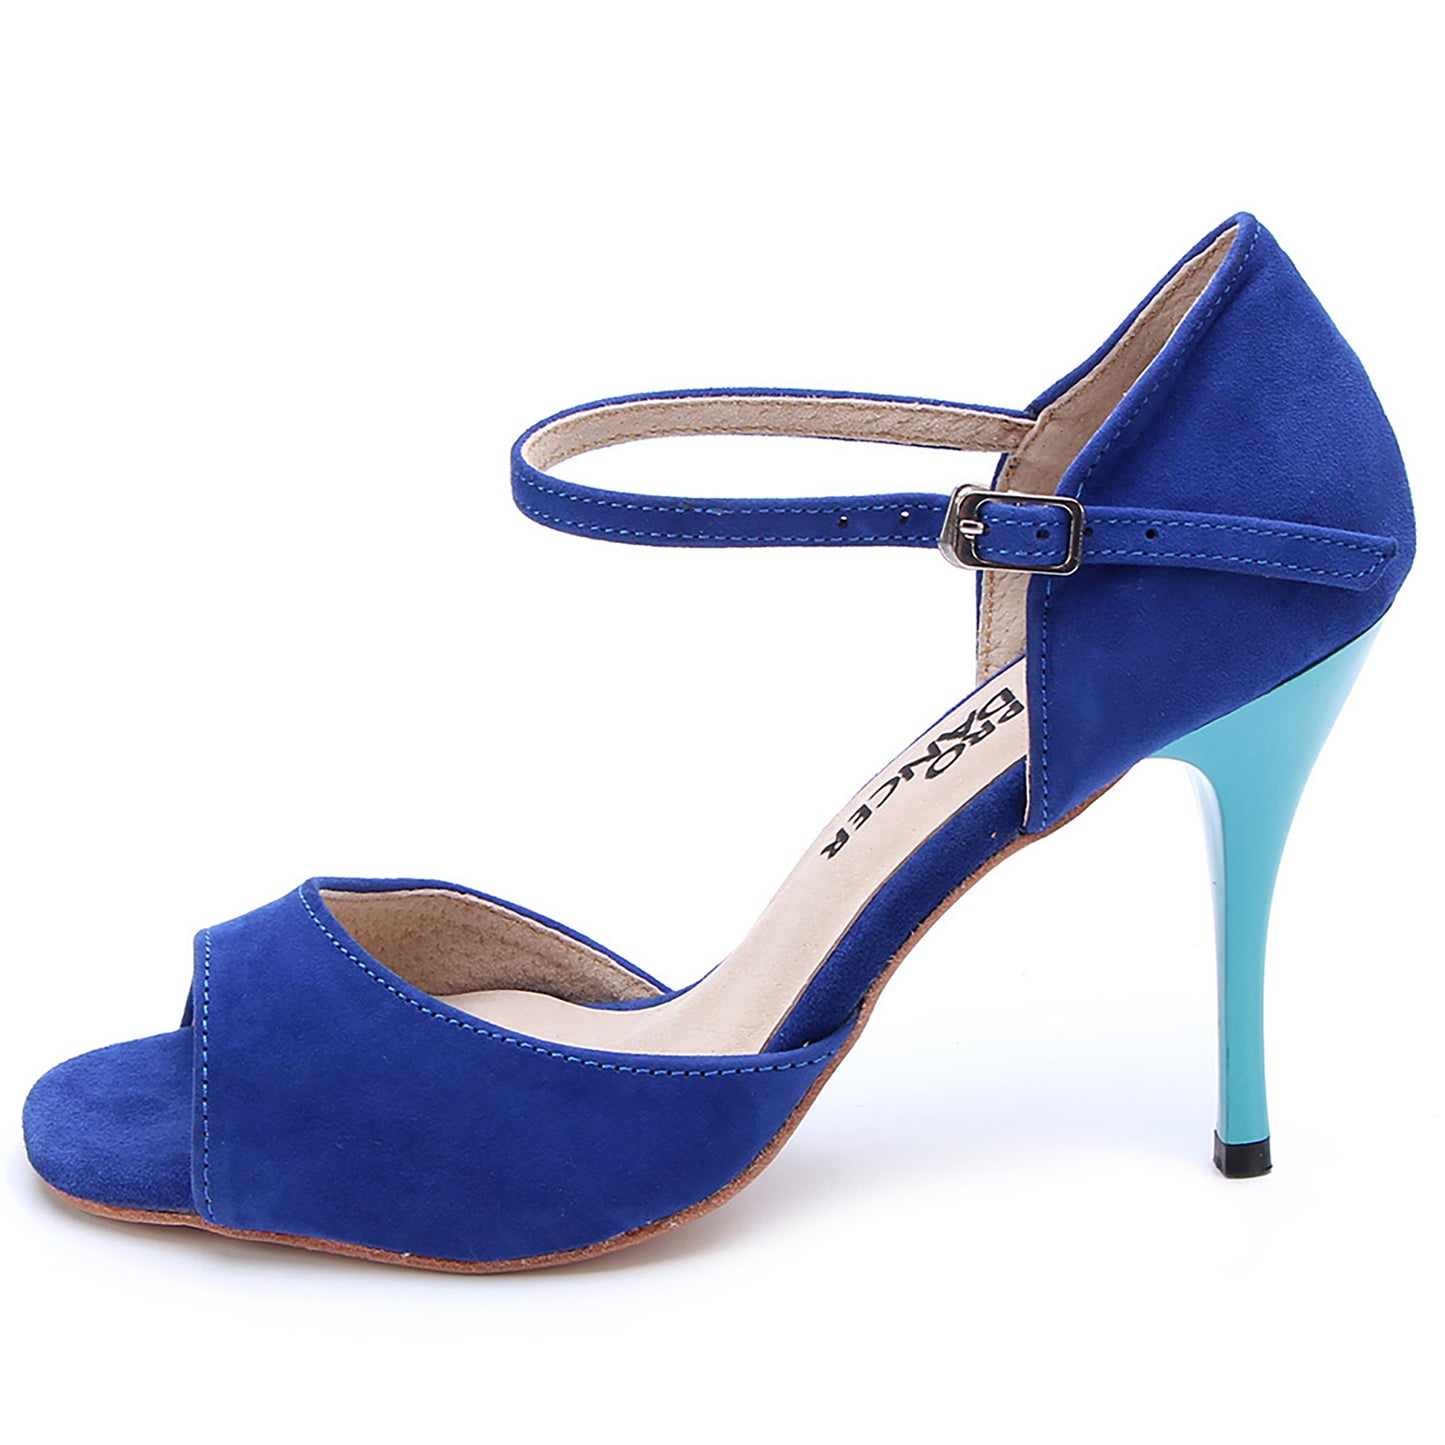 Pro Dancer Argentine Tango Shoes for Women High Heel Dance Sandals Leather Sole Blue (PD-9001D)